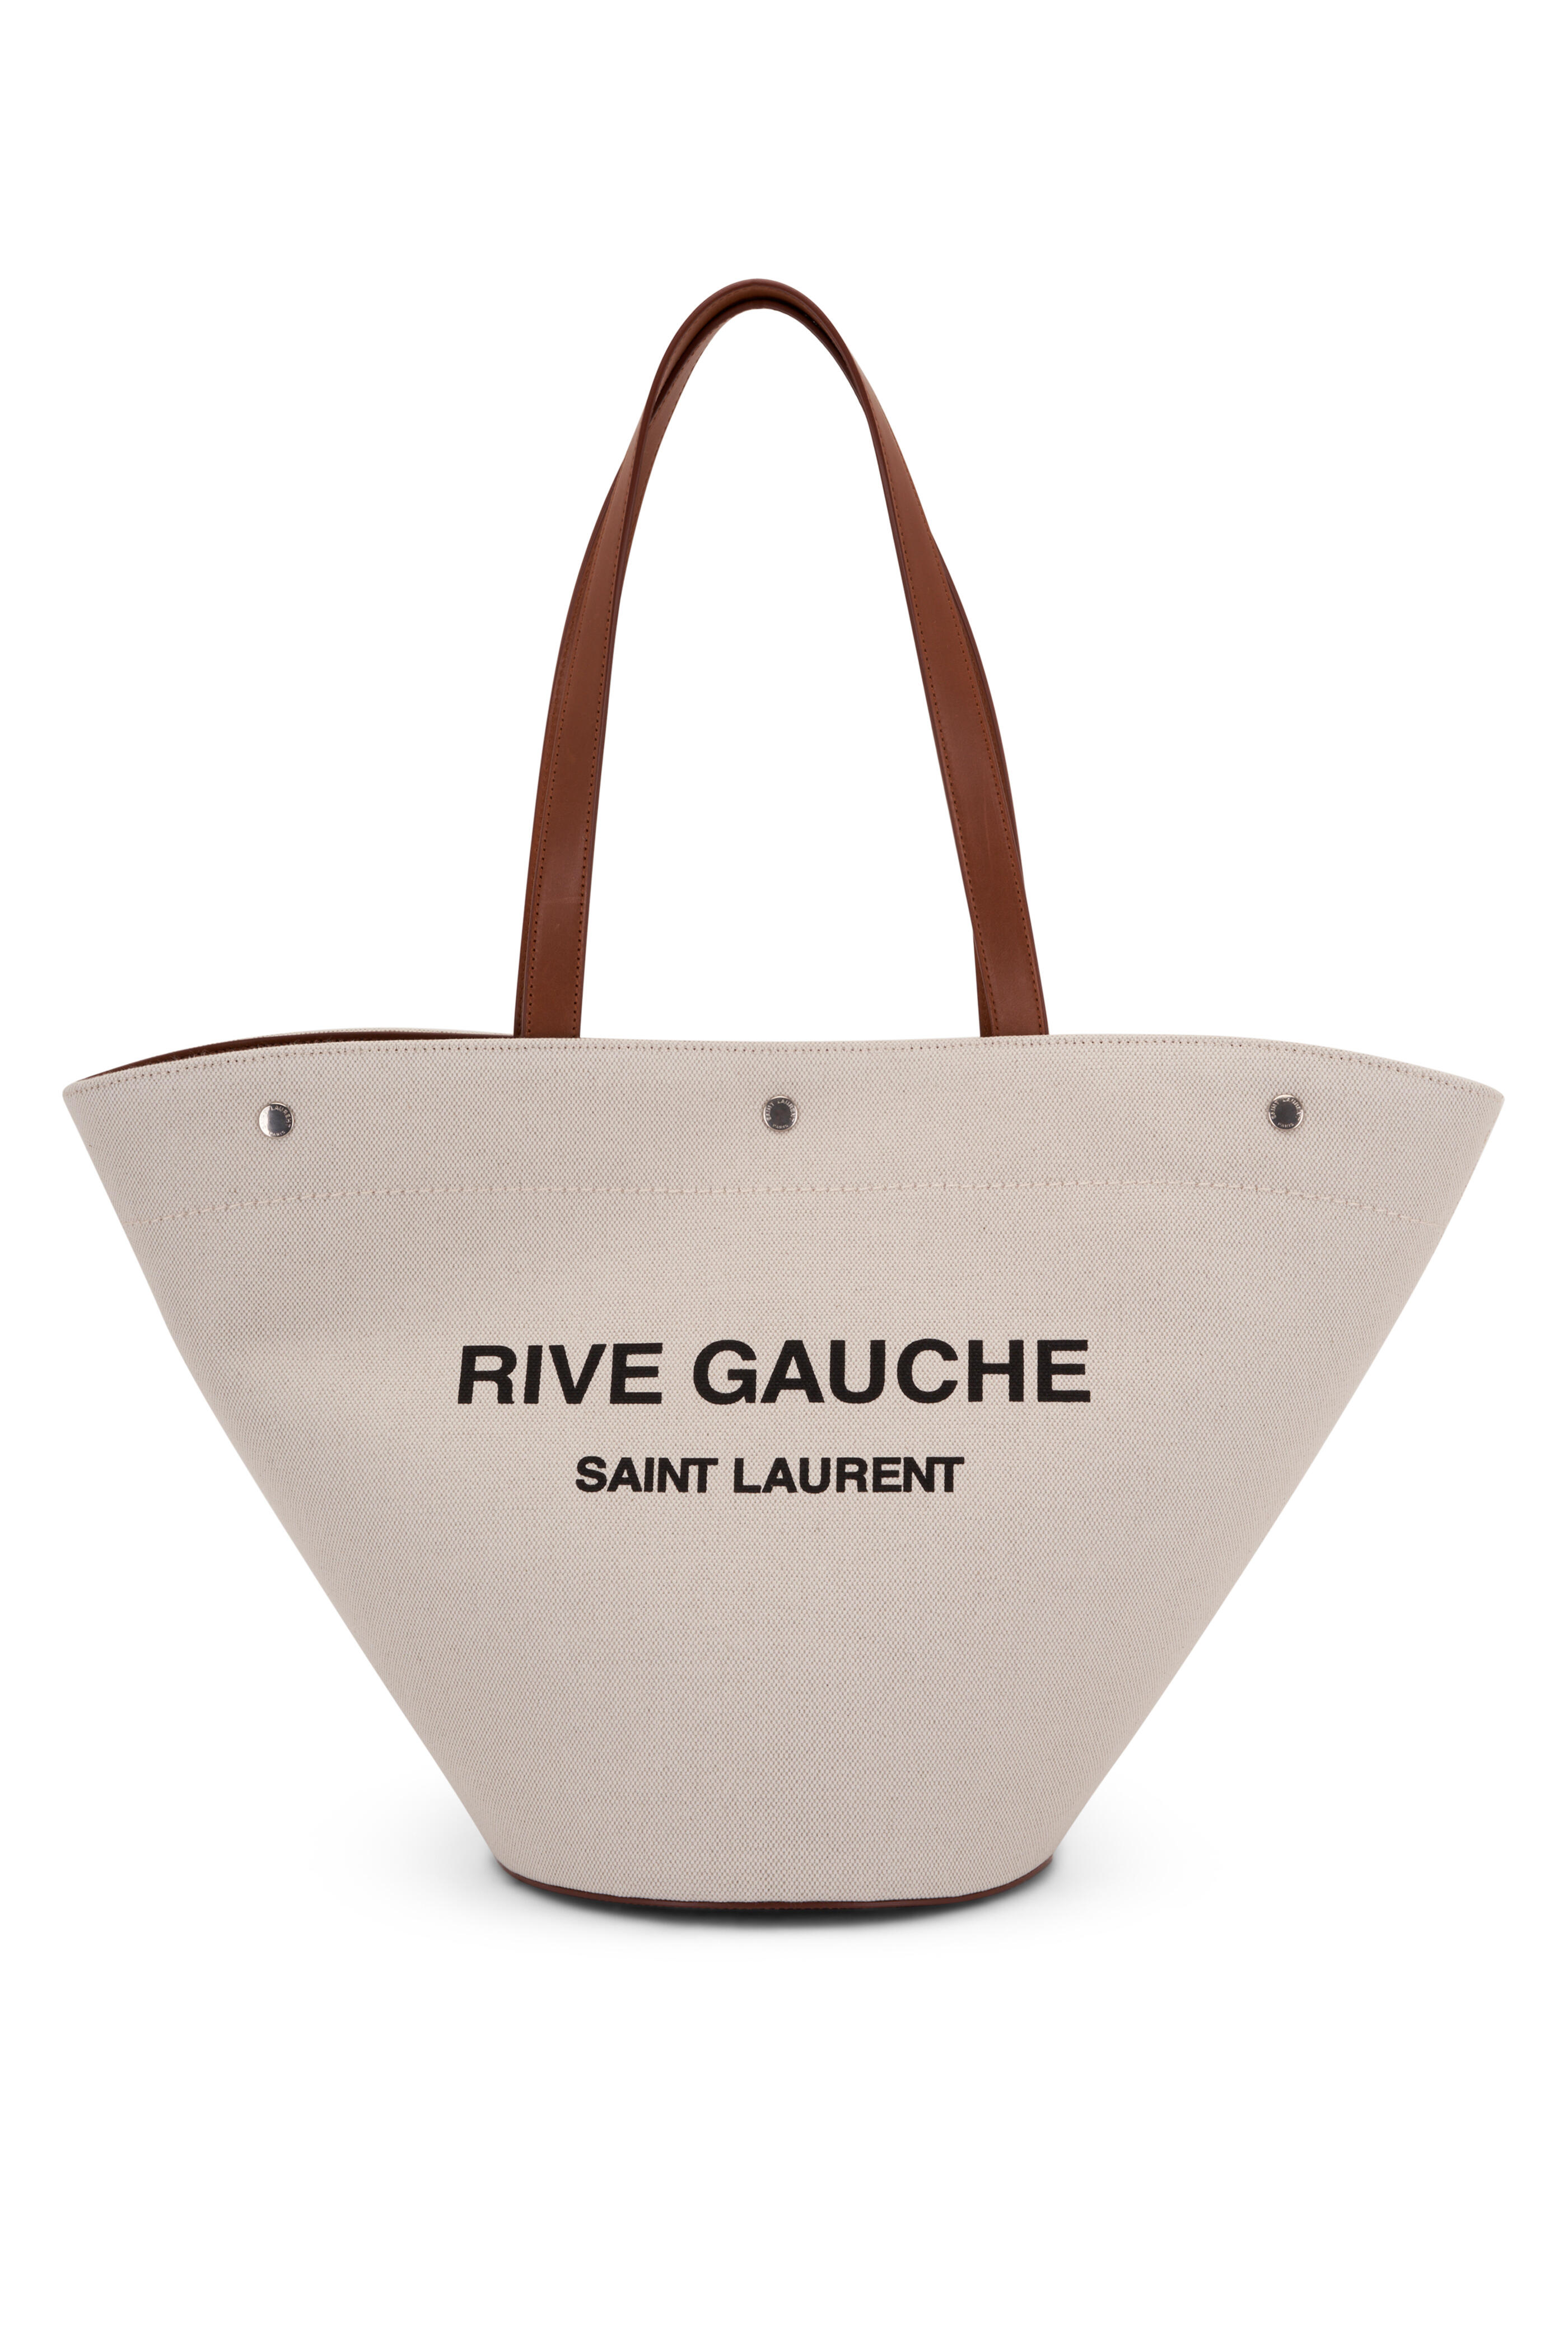 Saint Laurent Rive Gauche Tote Bag in Black & White, Black. Size all.